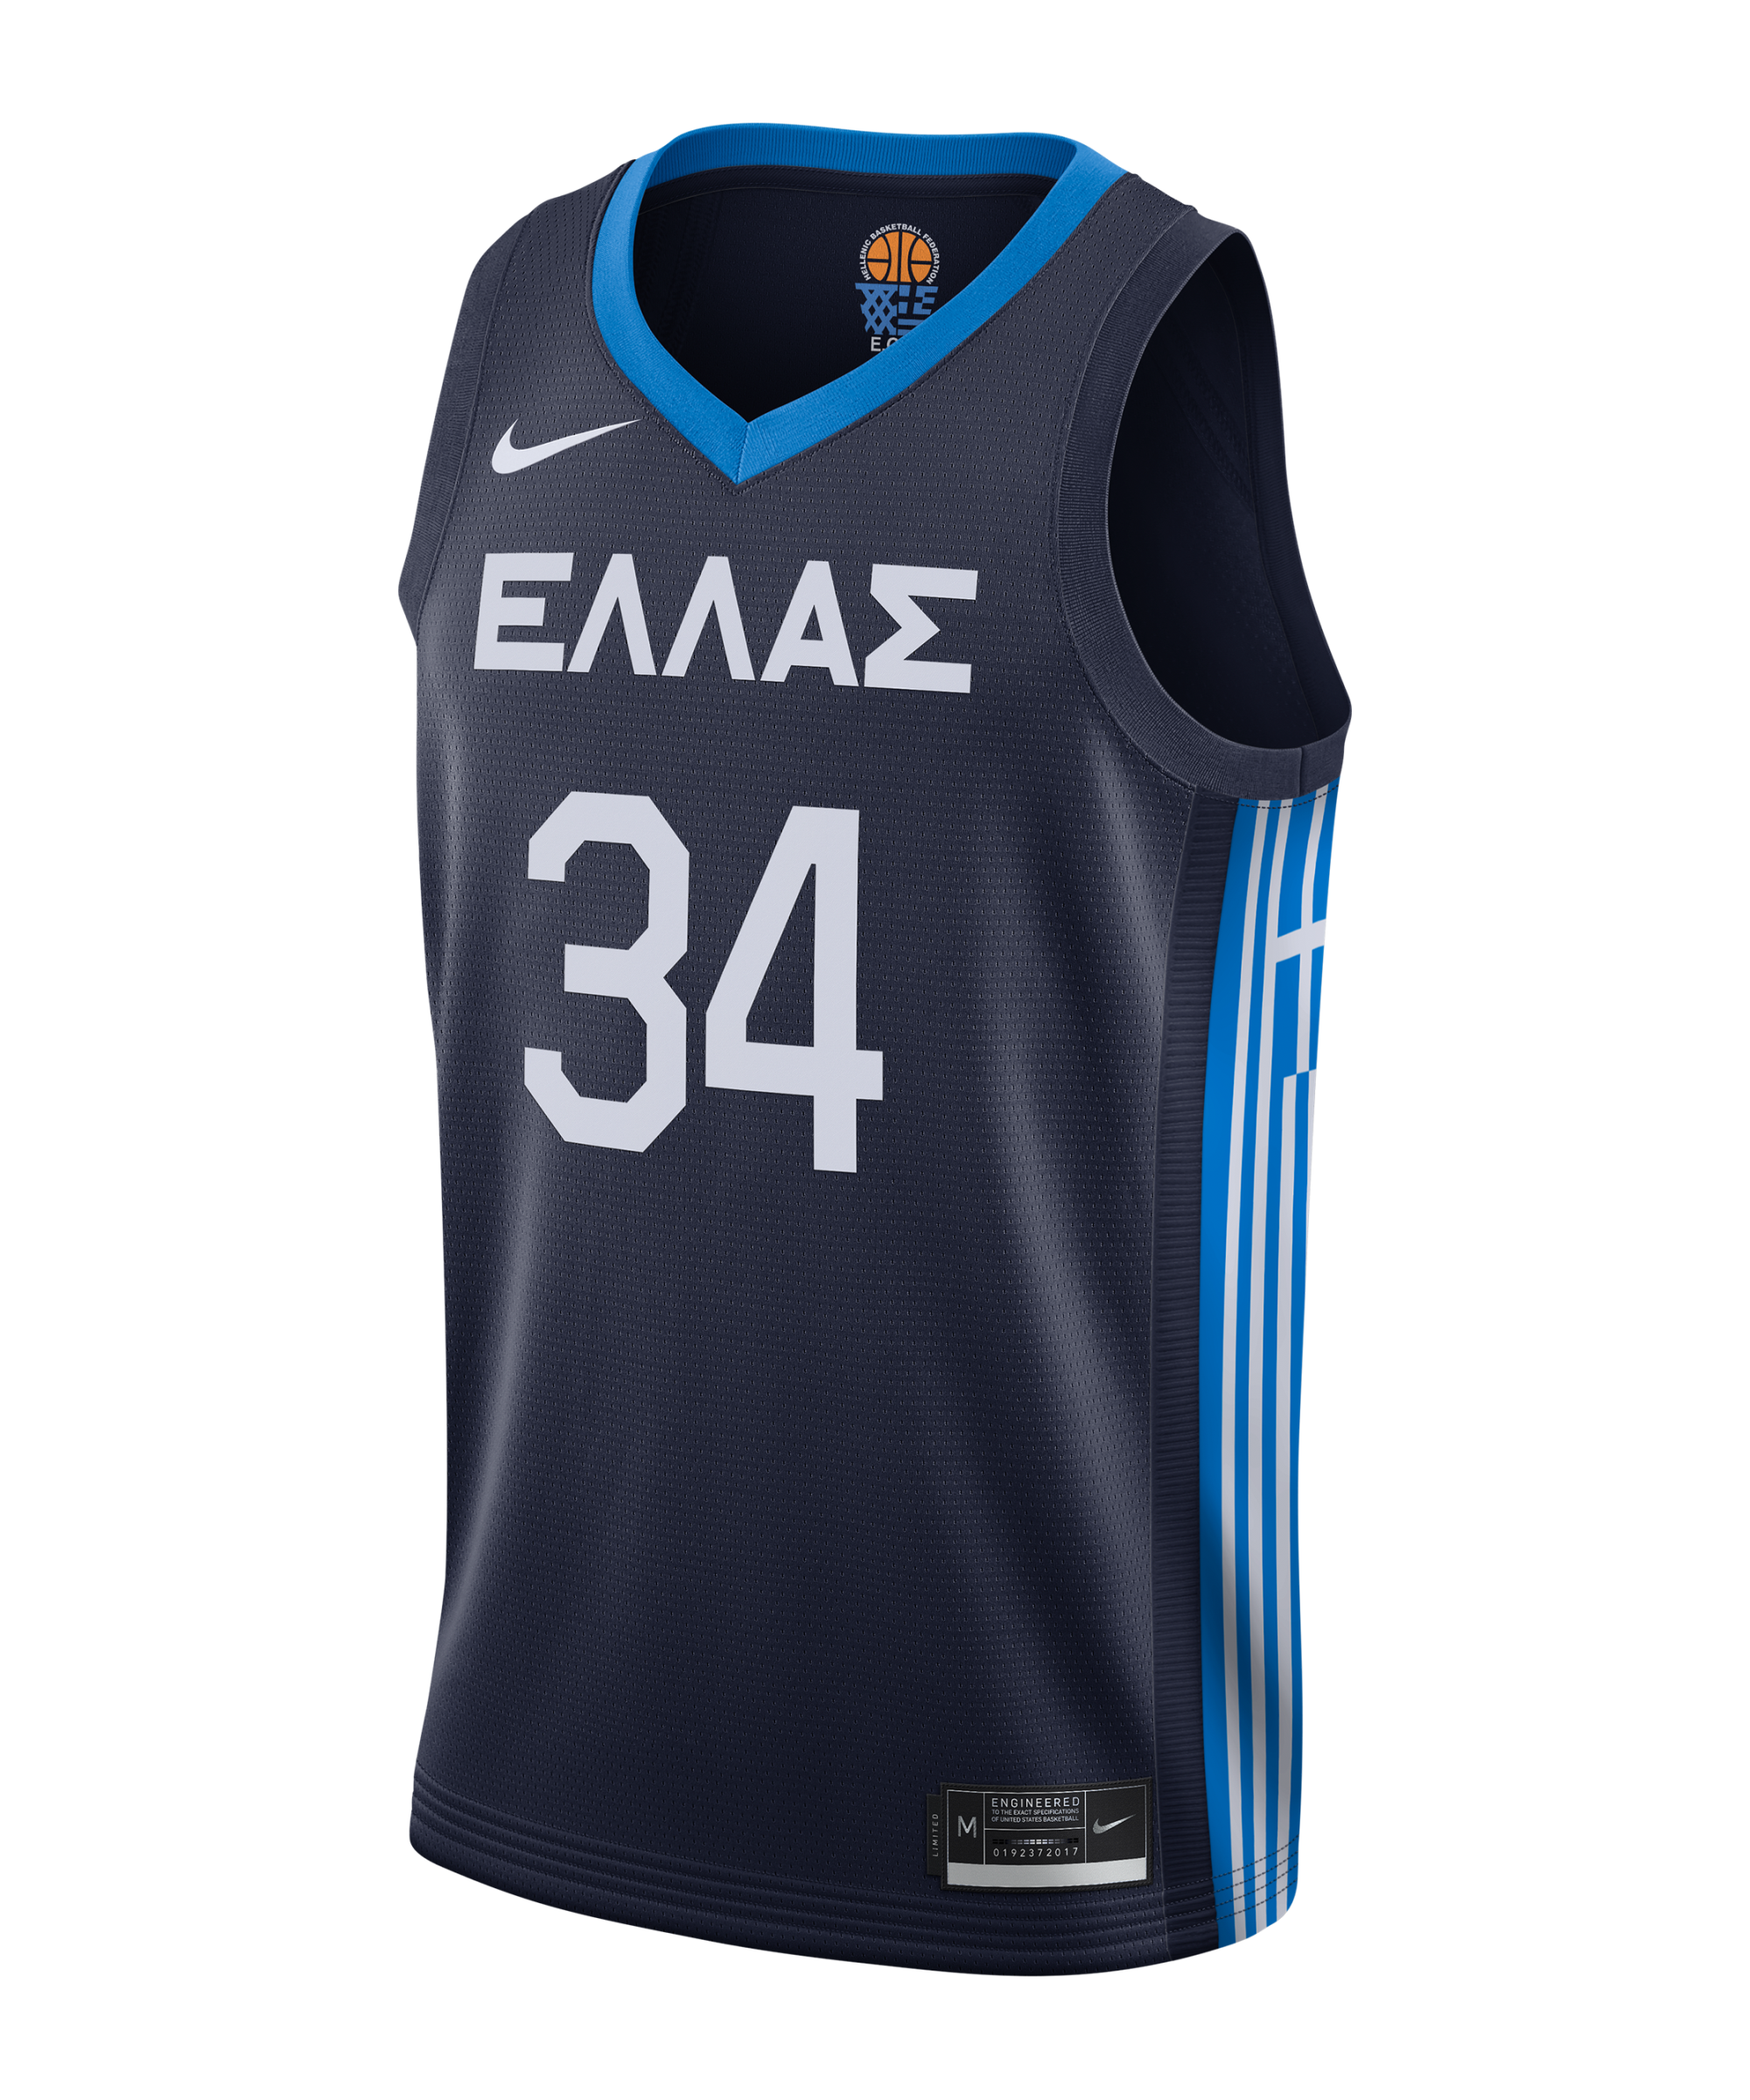 middelen Dusver Vulgariteit Nike Griechenland Shirt LE Basketball - Gray